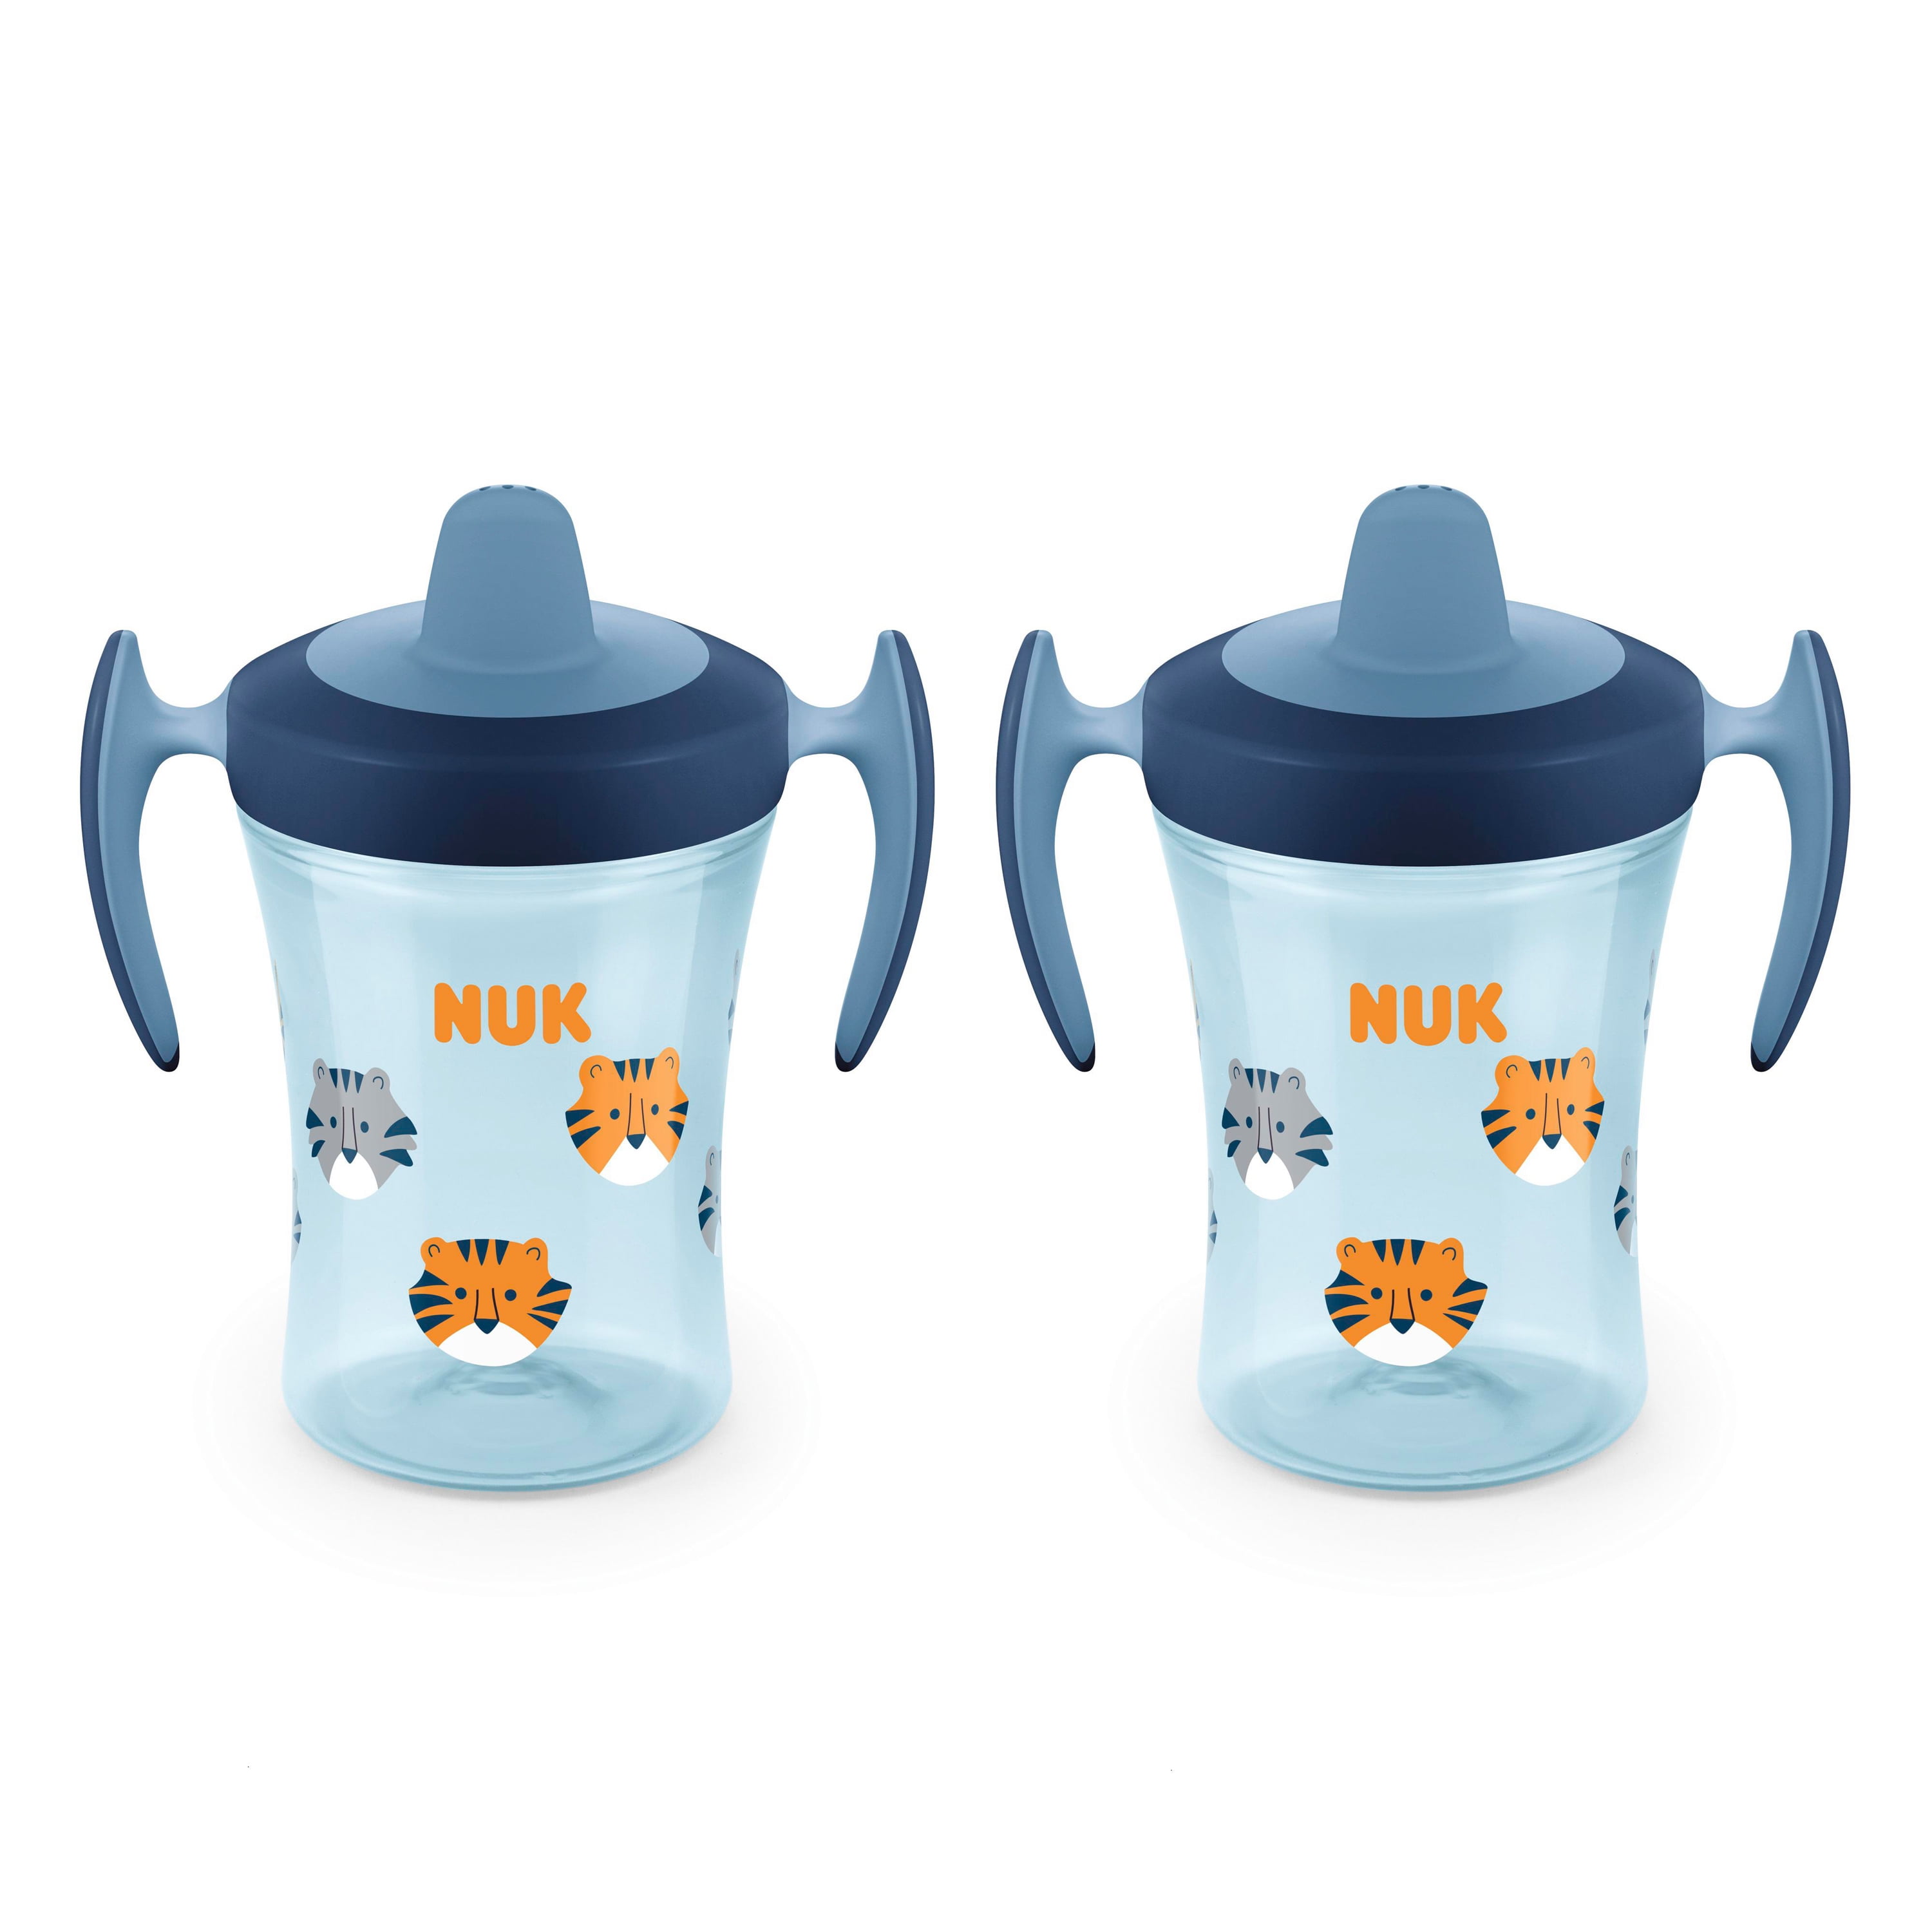 Nuk Evolution Soft Spout Learner Cup, 8 oz, 2-Pack